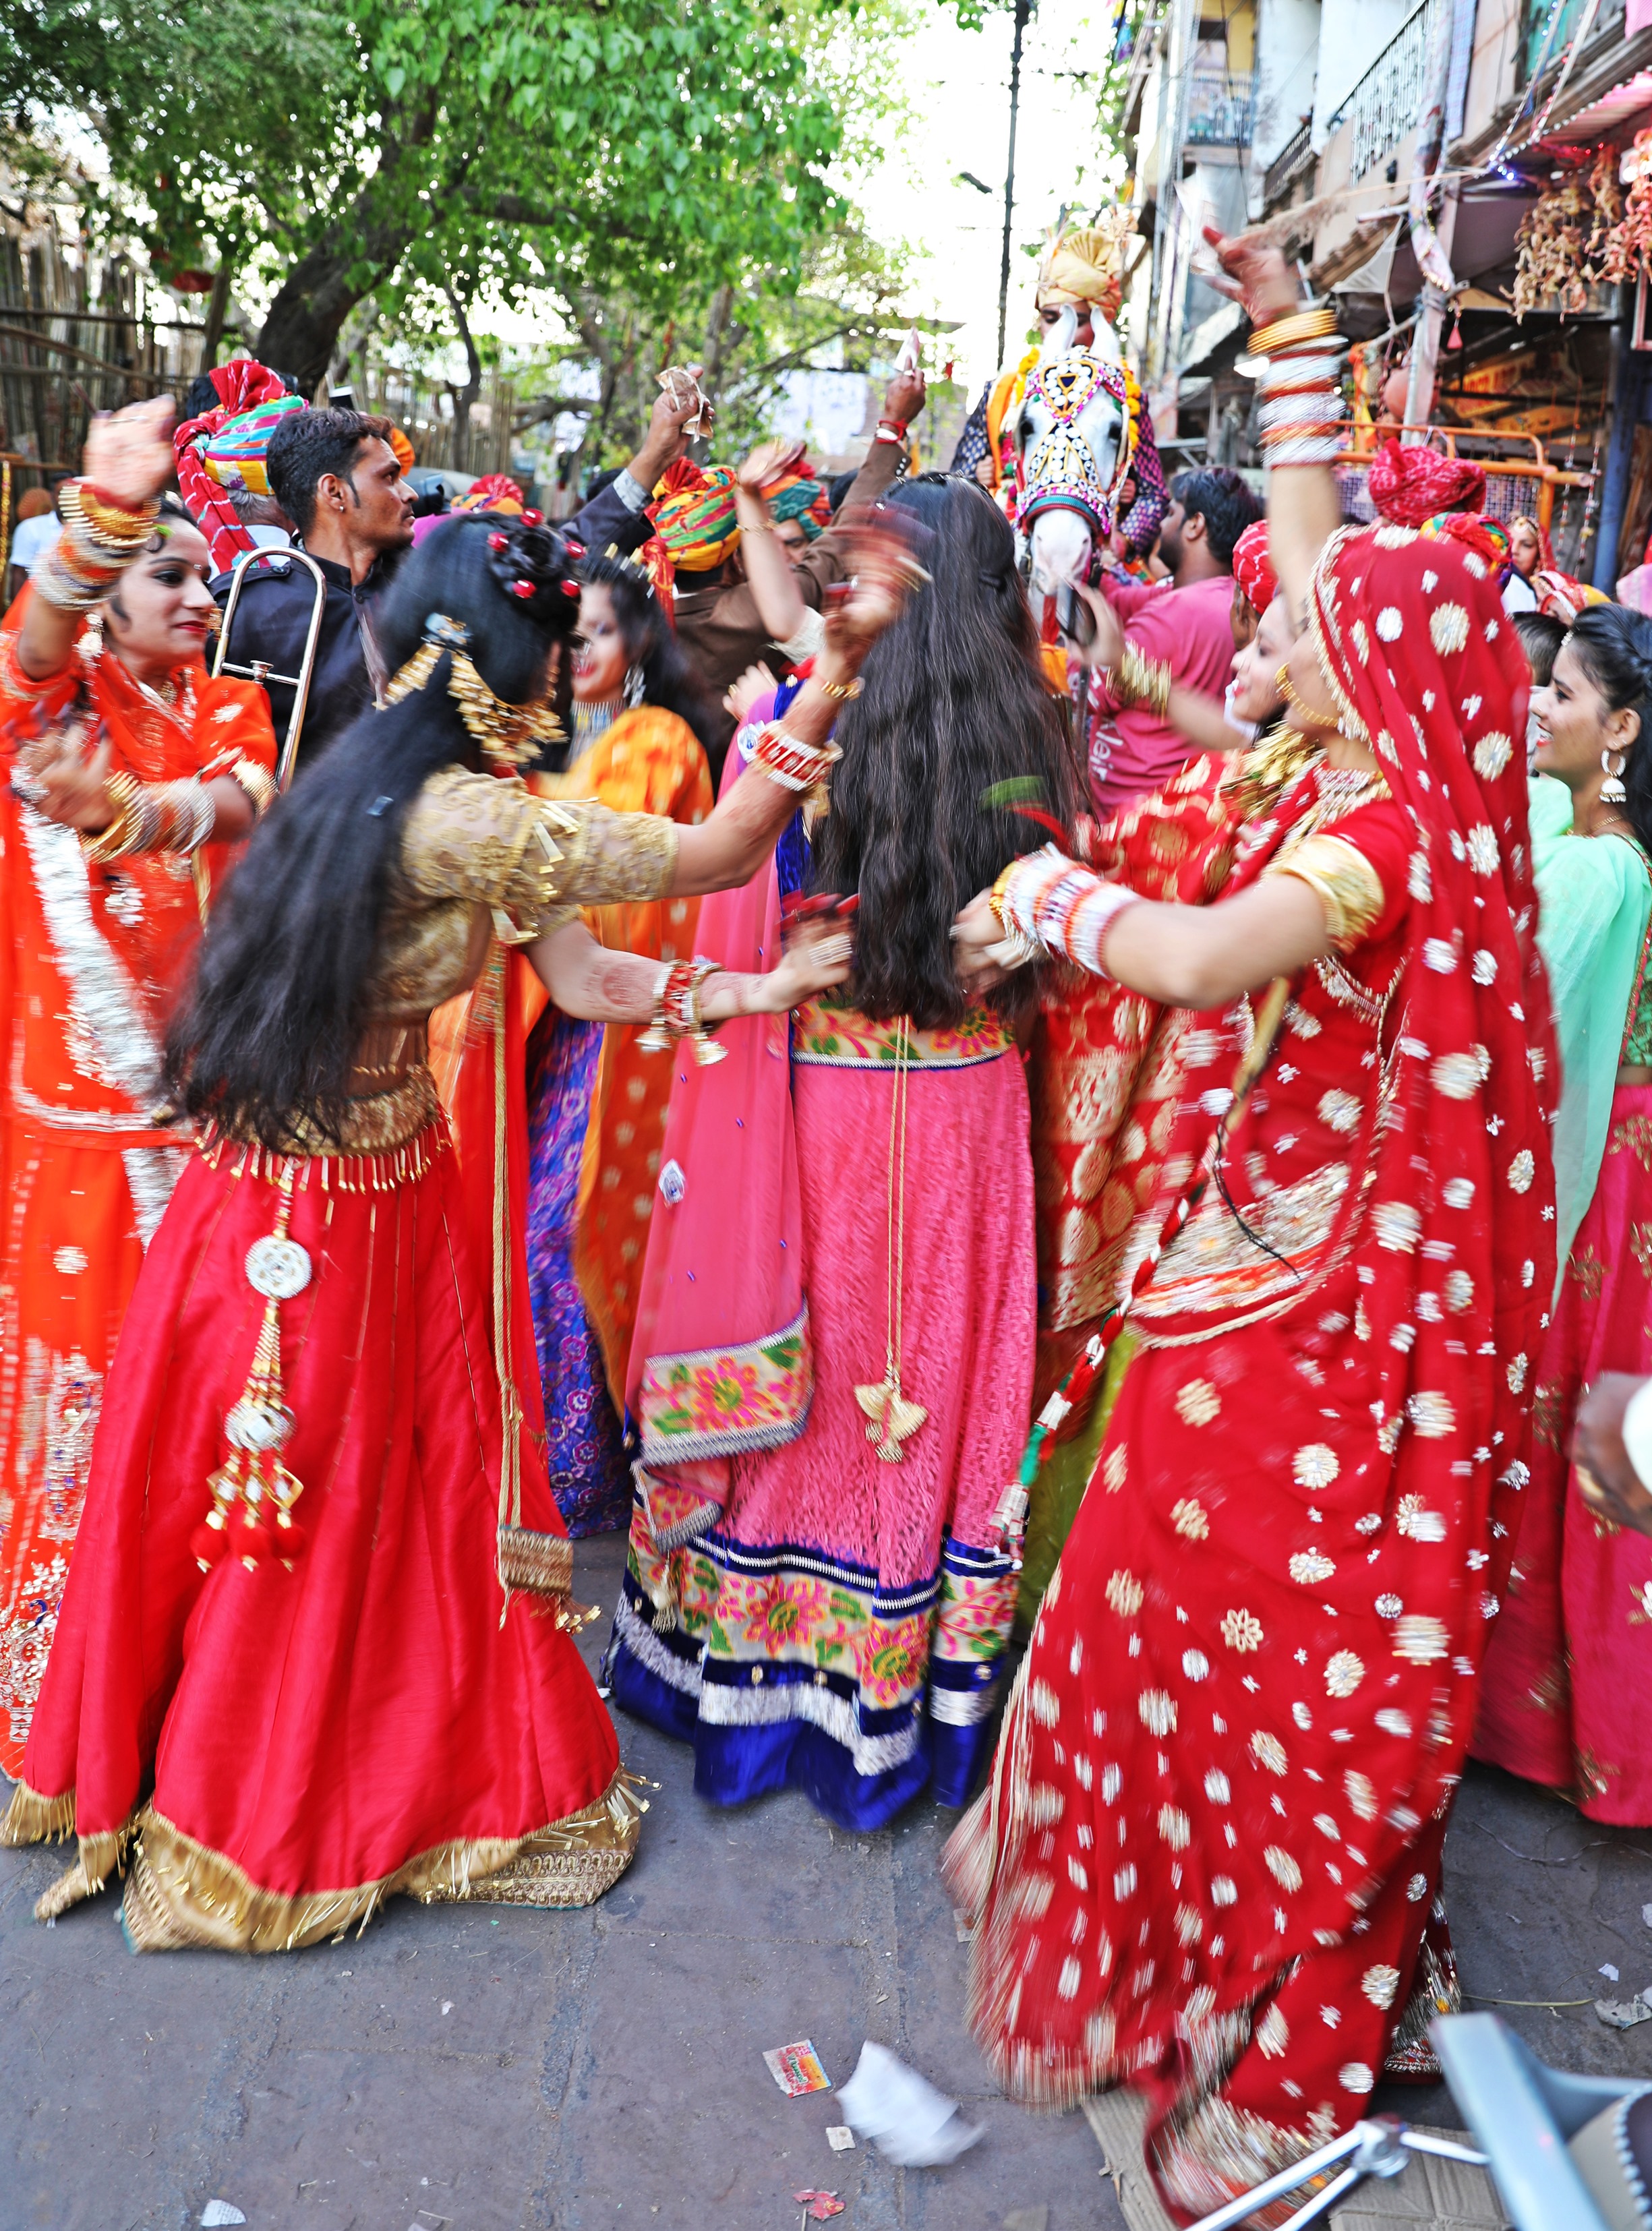 Women dancing in front of the groom on horseback, Jodhpur